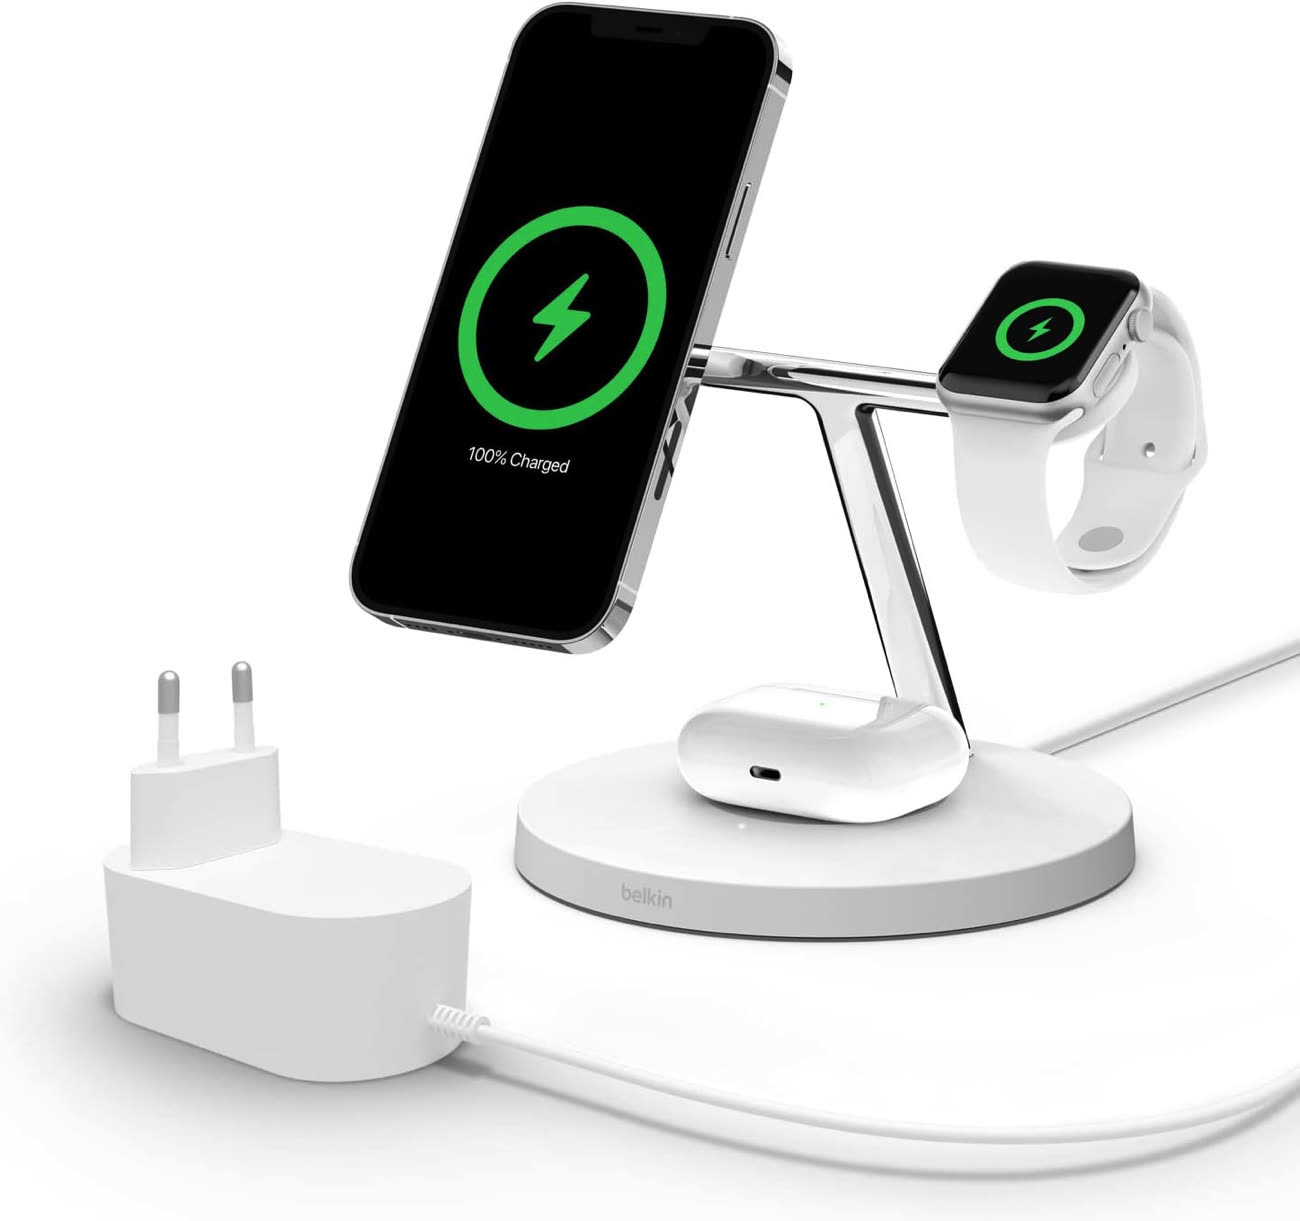 Chargeur Sans fil 10W, Charge Induction pour Smartphone QI, Belkin